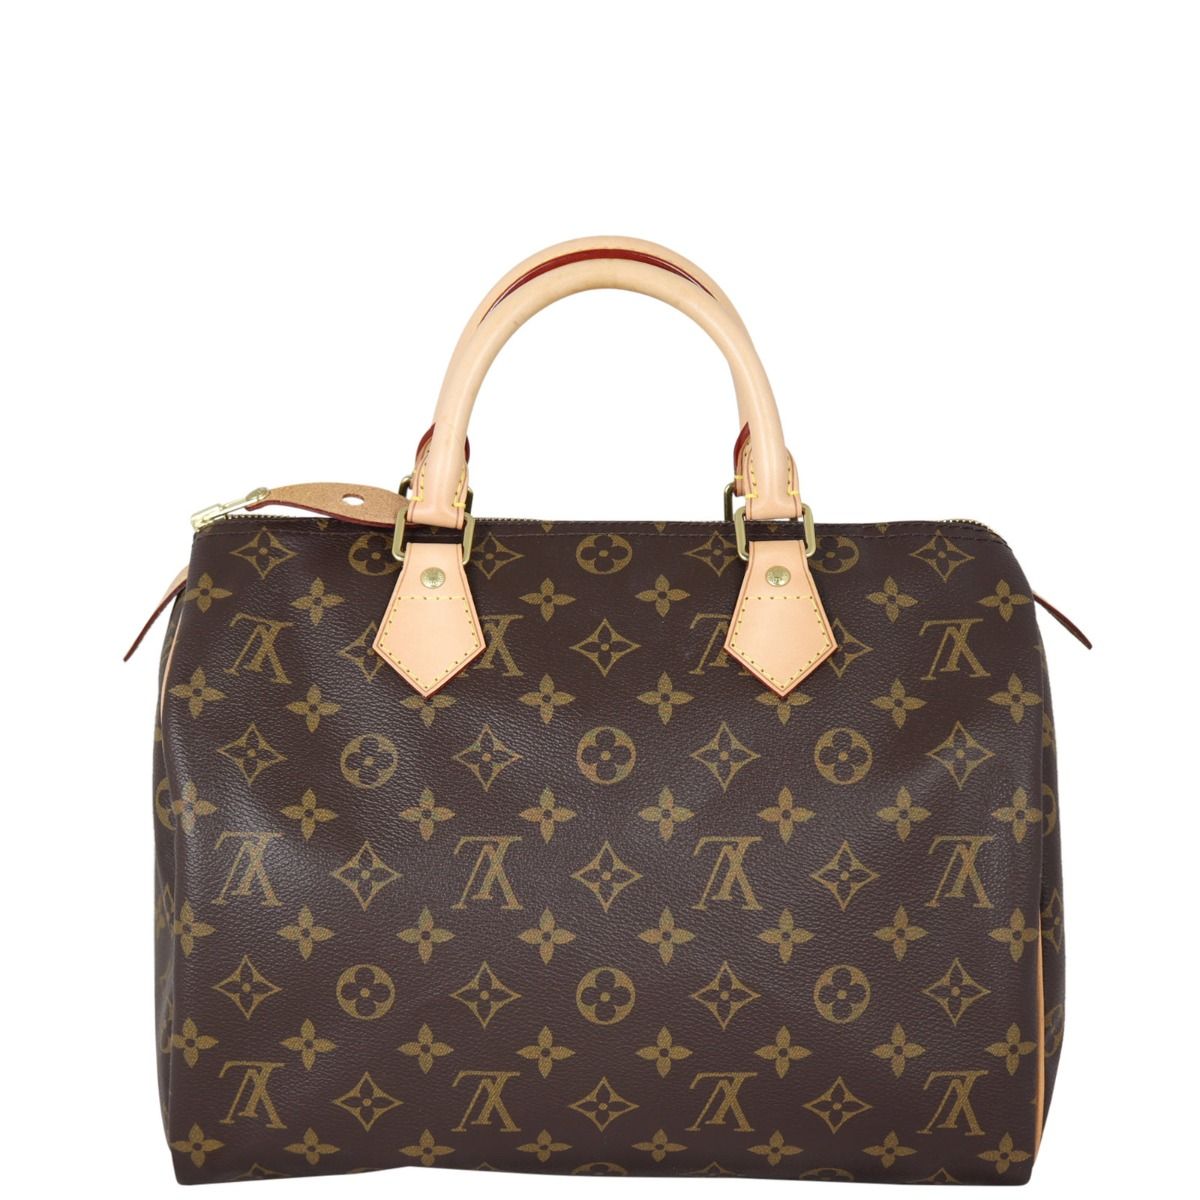 Louis Vuitton Speedy Monogramouflage: Is It Worth It